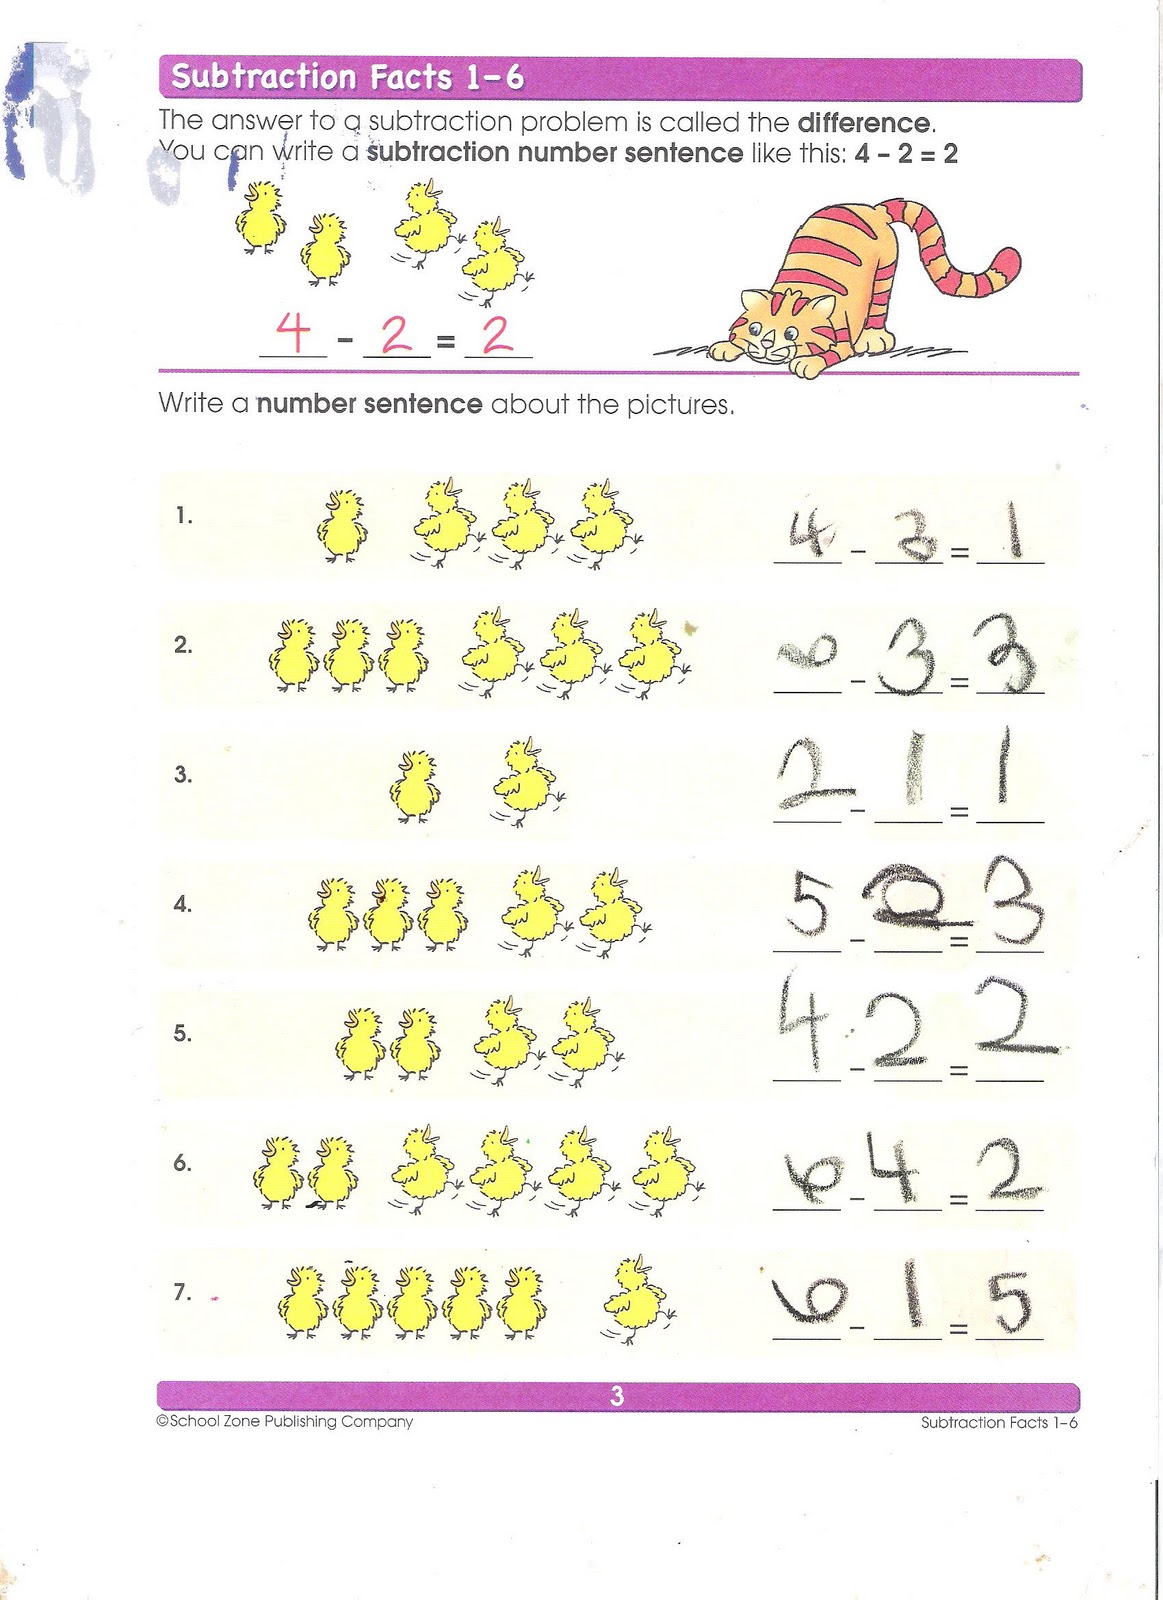 cardo school subtraction math worksheet completed